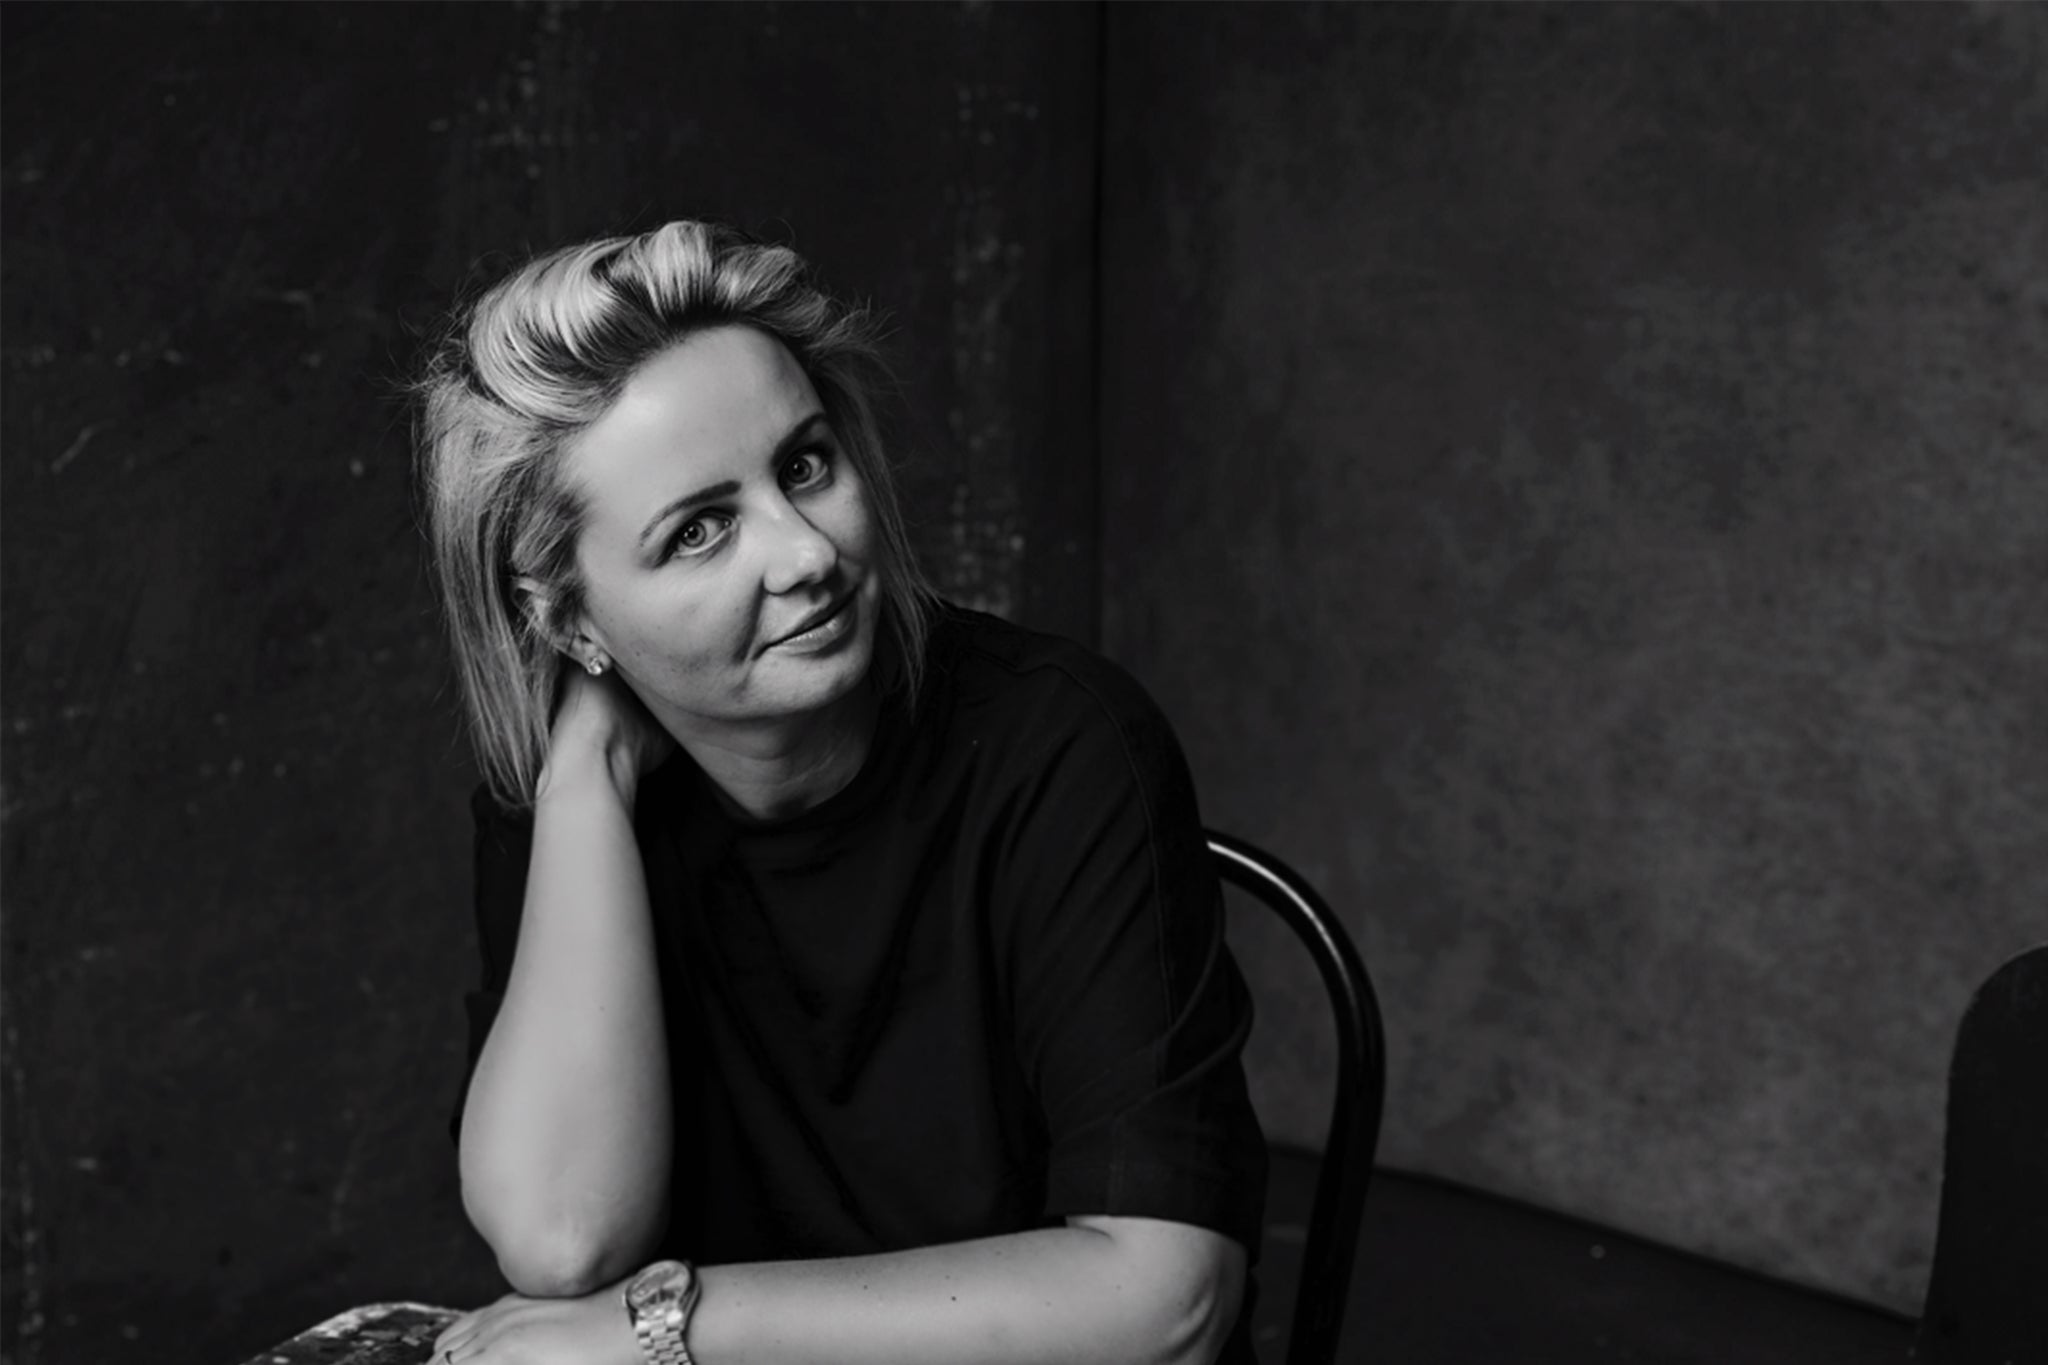 Meet Marina, Lara Bingle's stylist and creator of Albus Lumen now available at The UNDONE